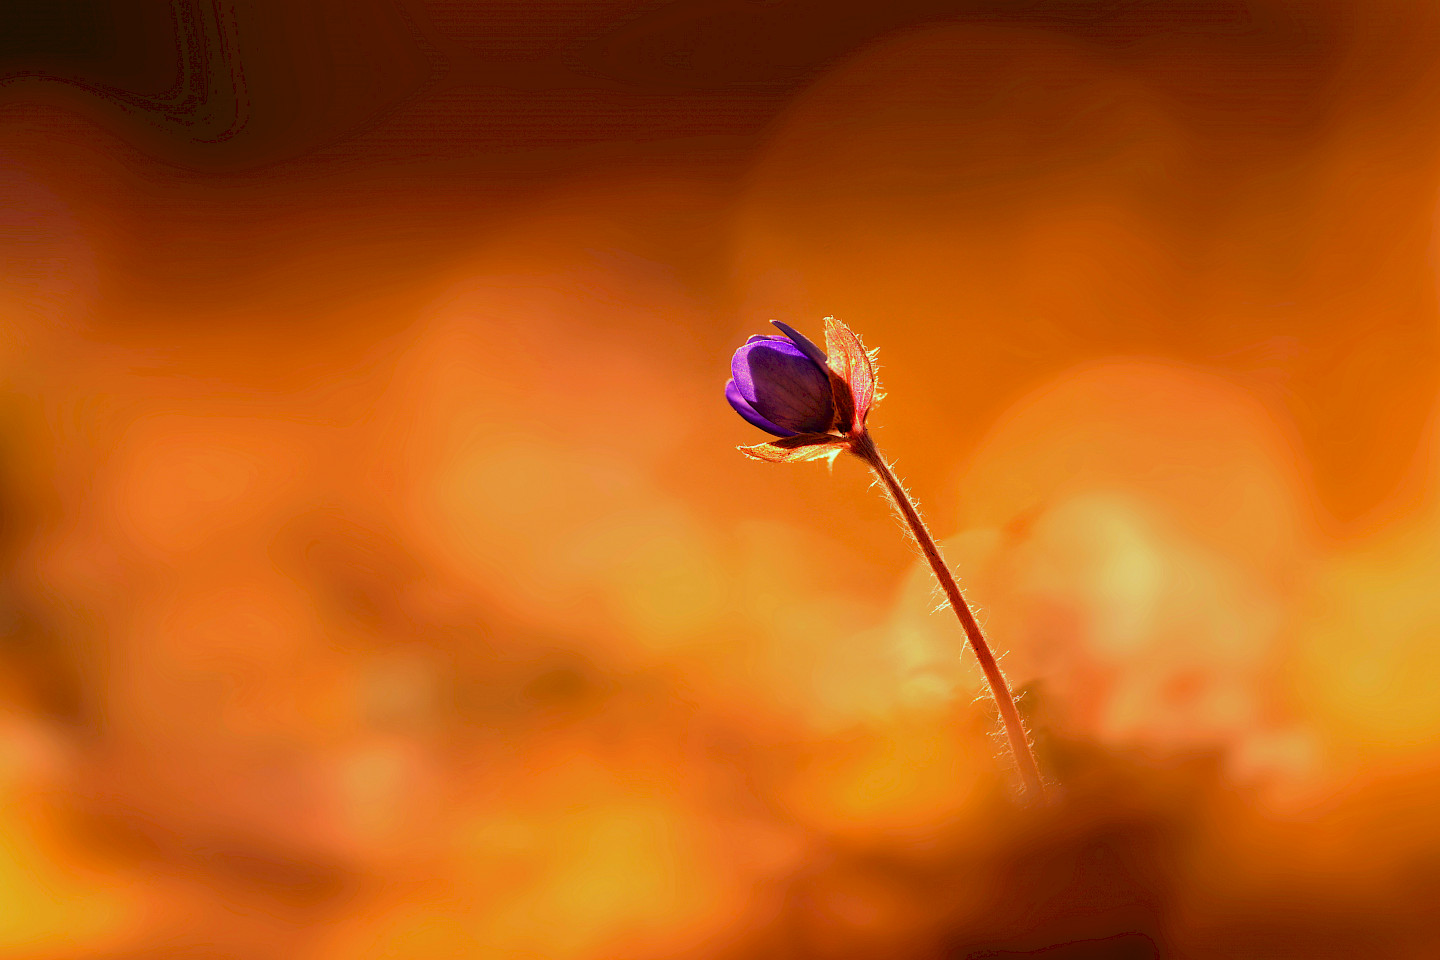 Flower in the dawn